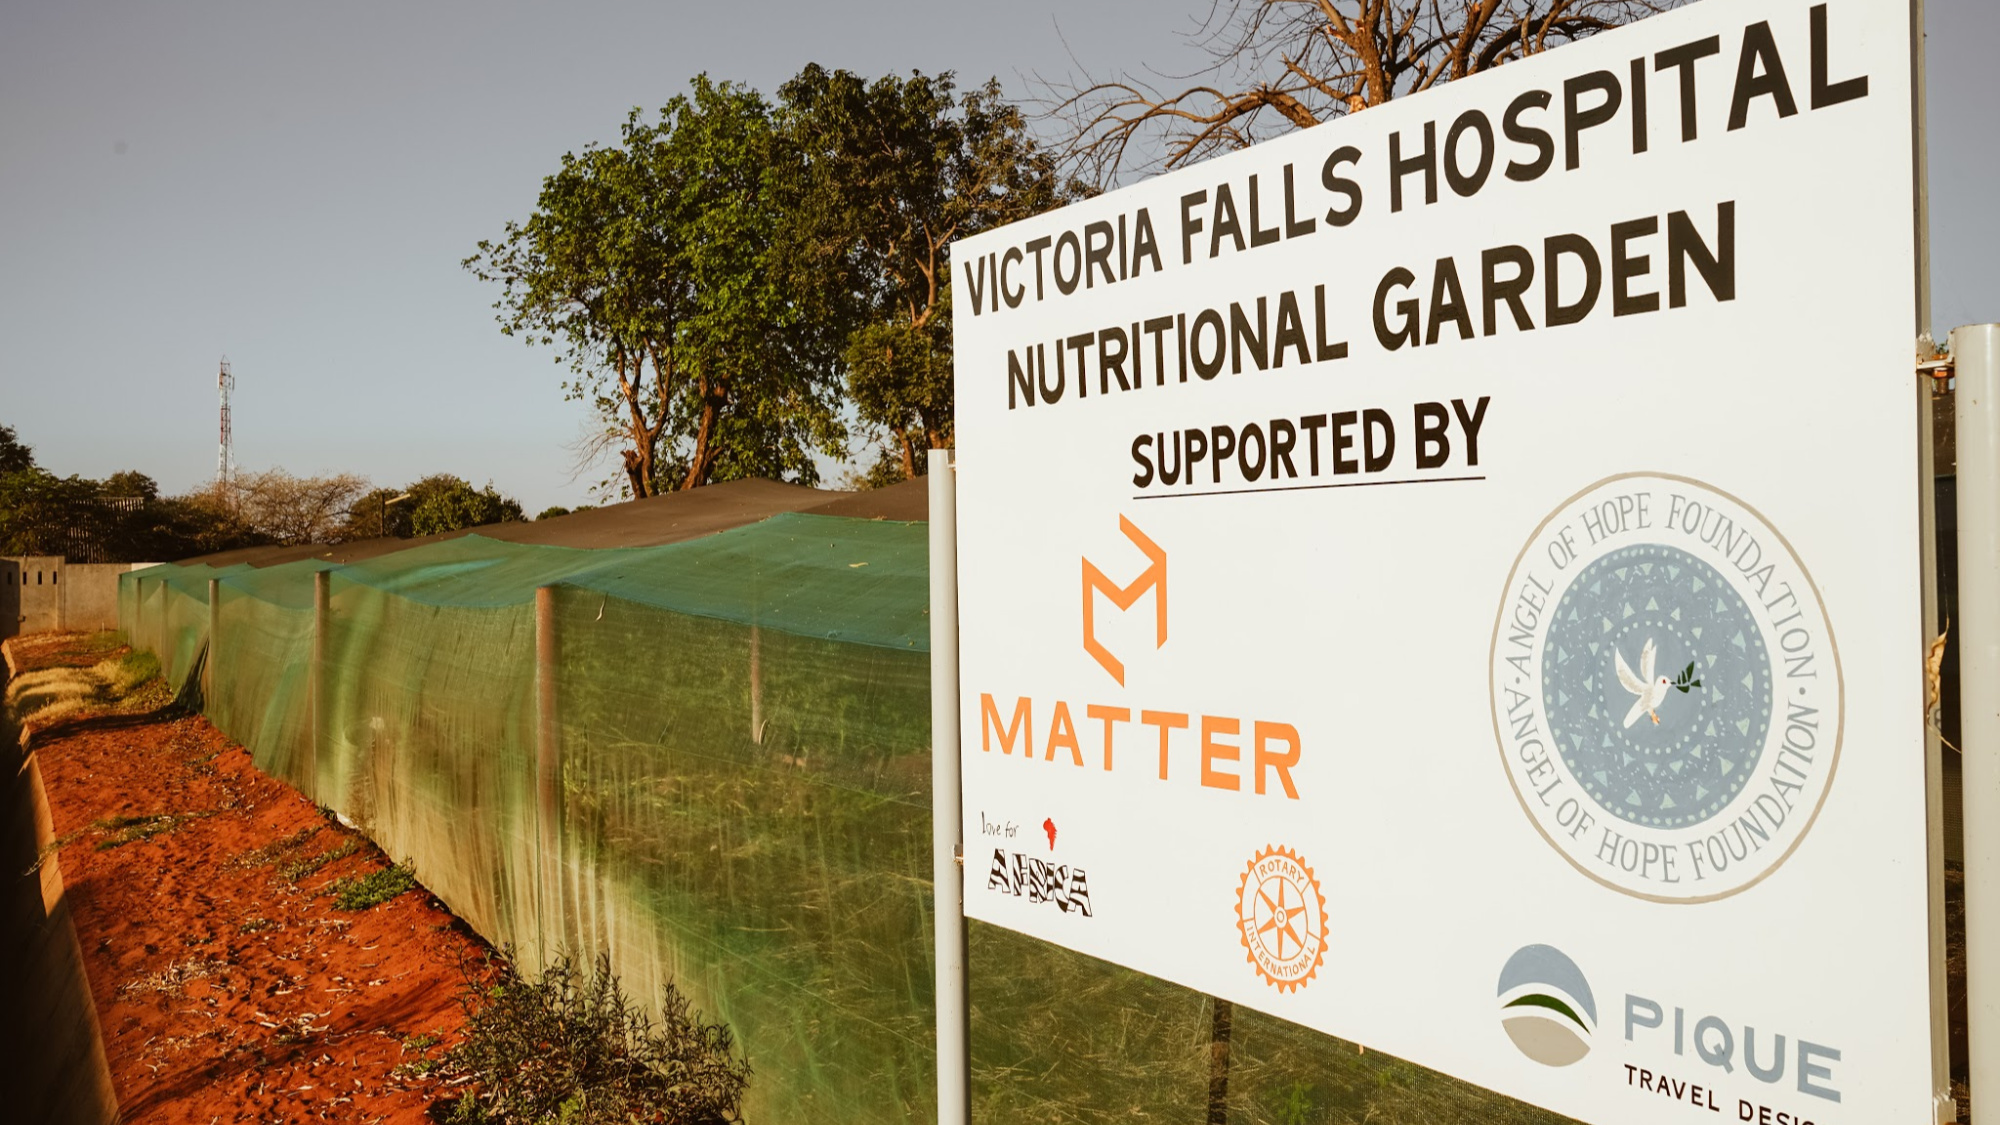 Victoria Falls Nutrition Garden